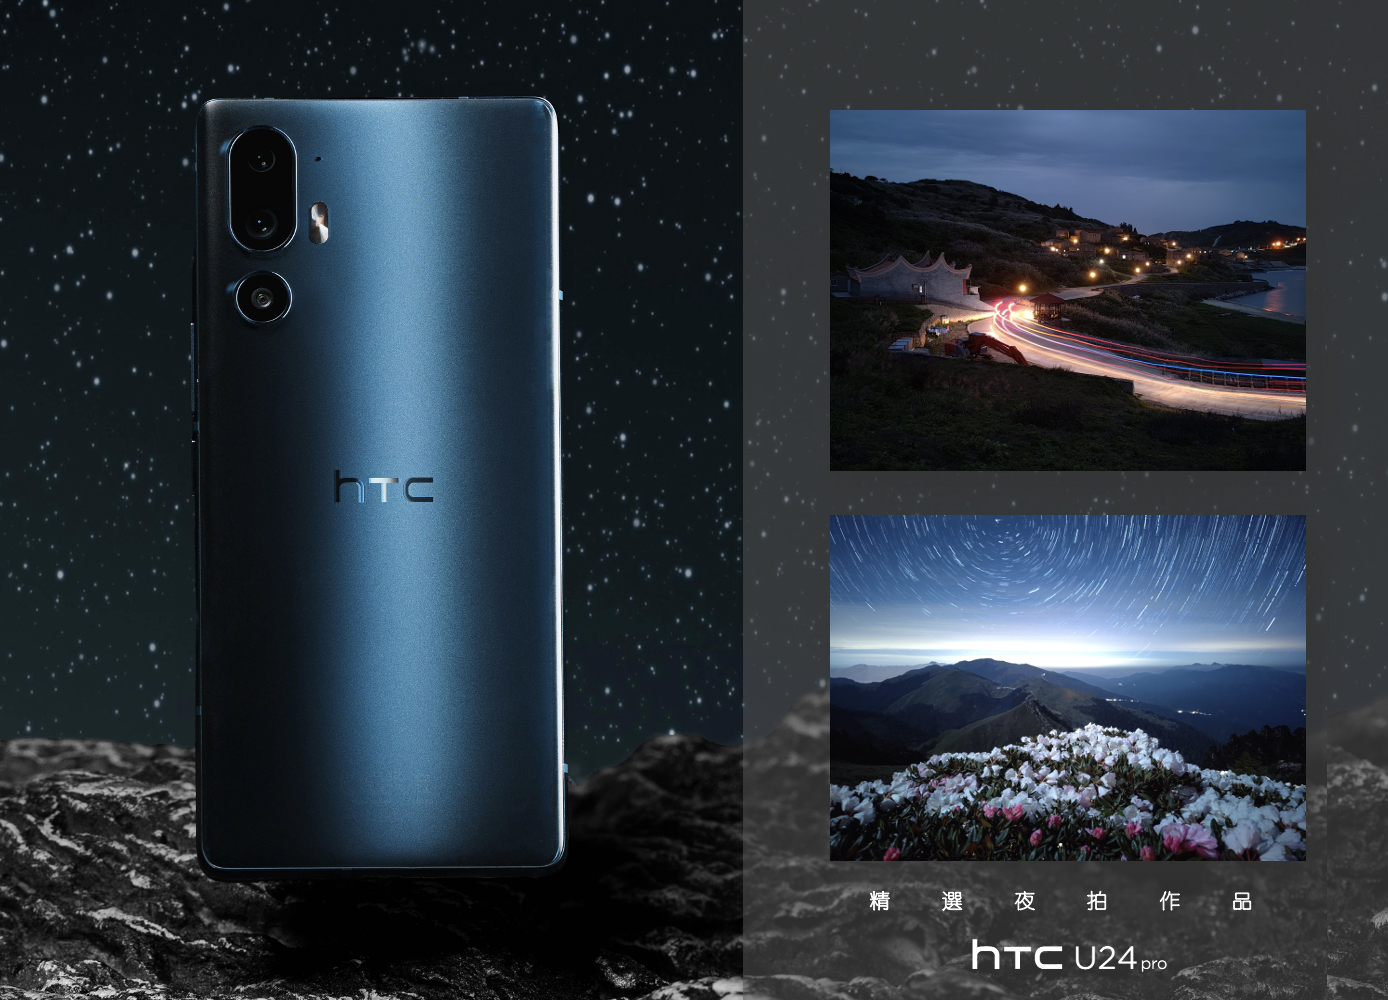 HTC 發表新一代 HTC U24 pro 極致沉浸 全面進化 全新手機 AI &#038; XR 社交娛樂體驗 今日搶先開賣 震撼登場 @3C 達人廖阿輝